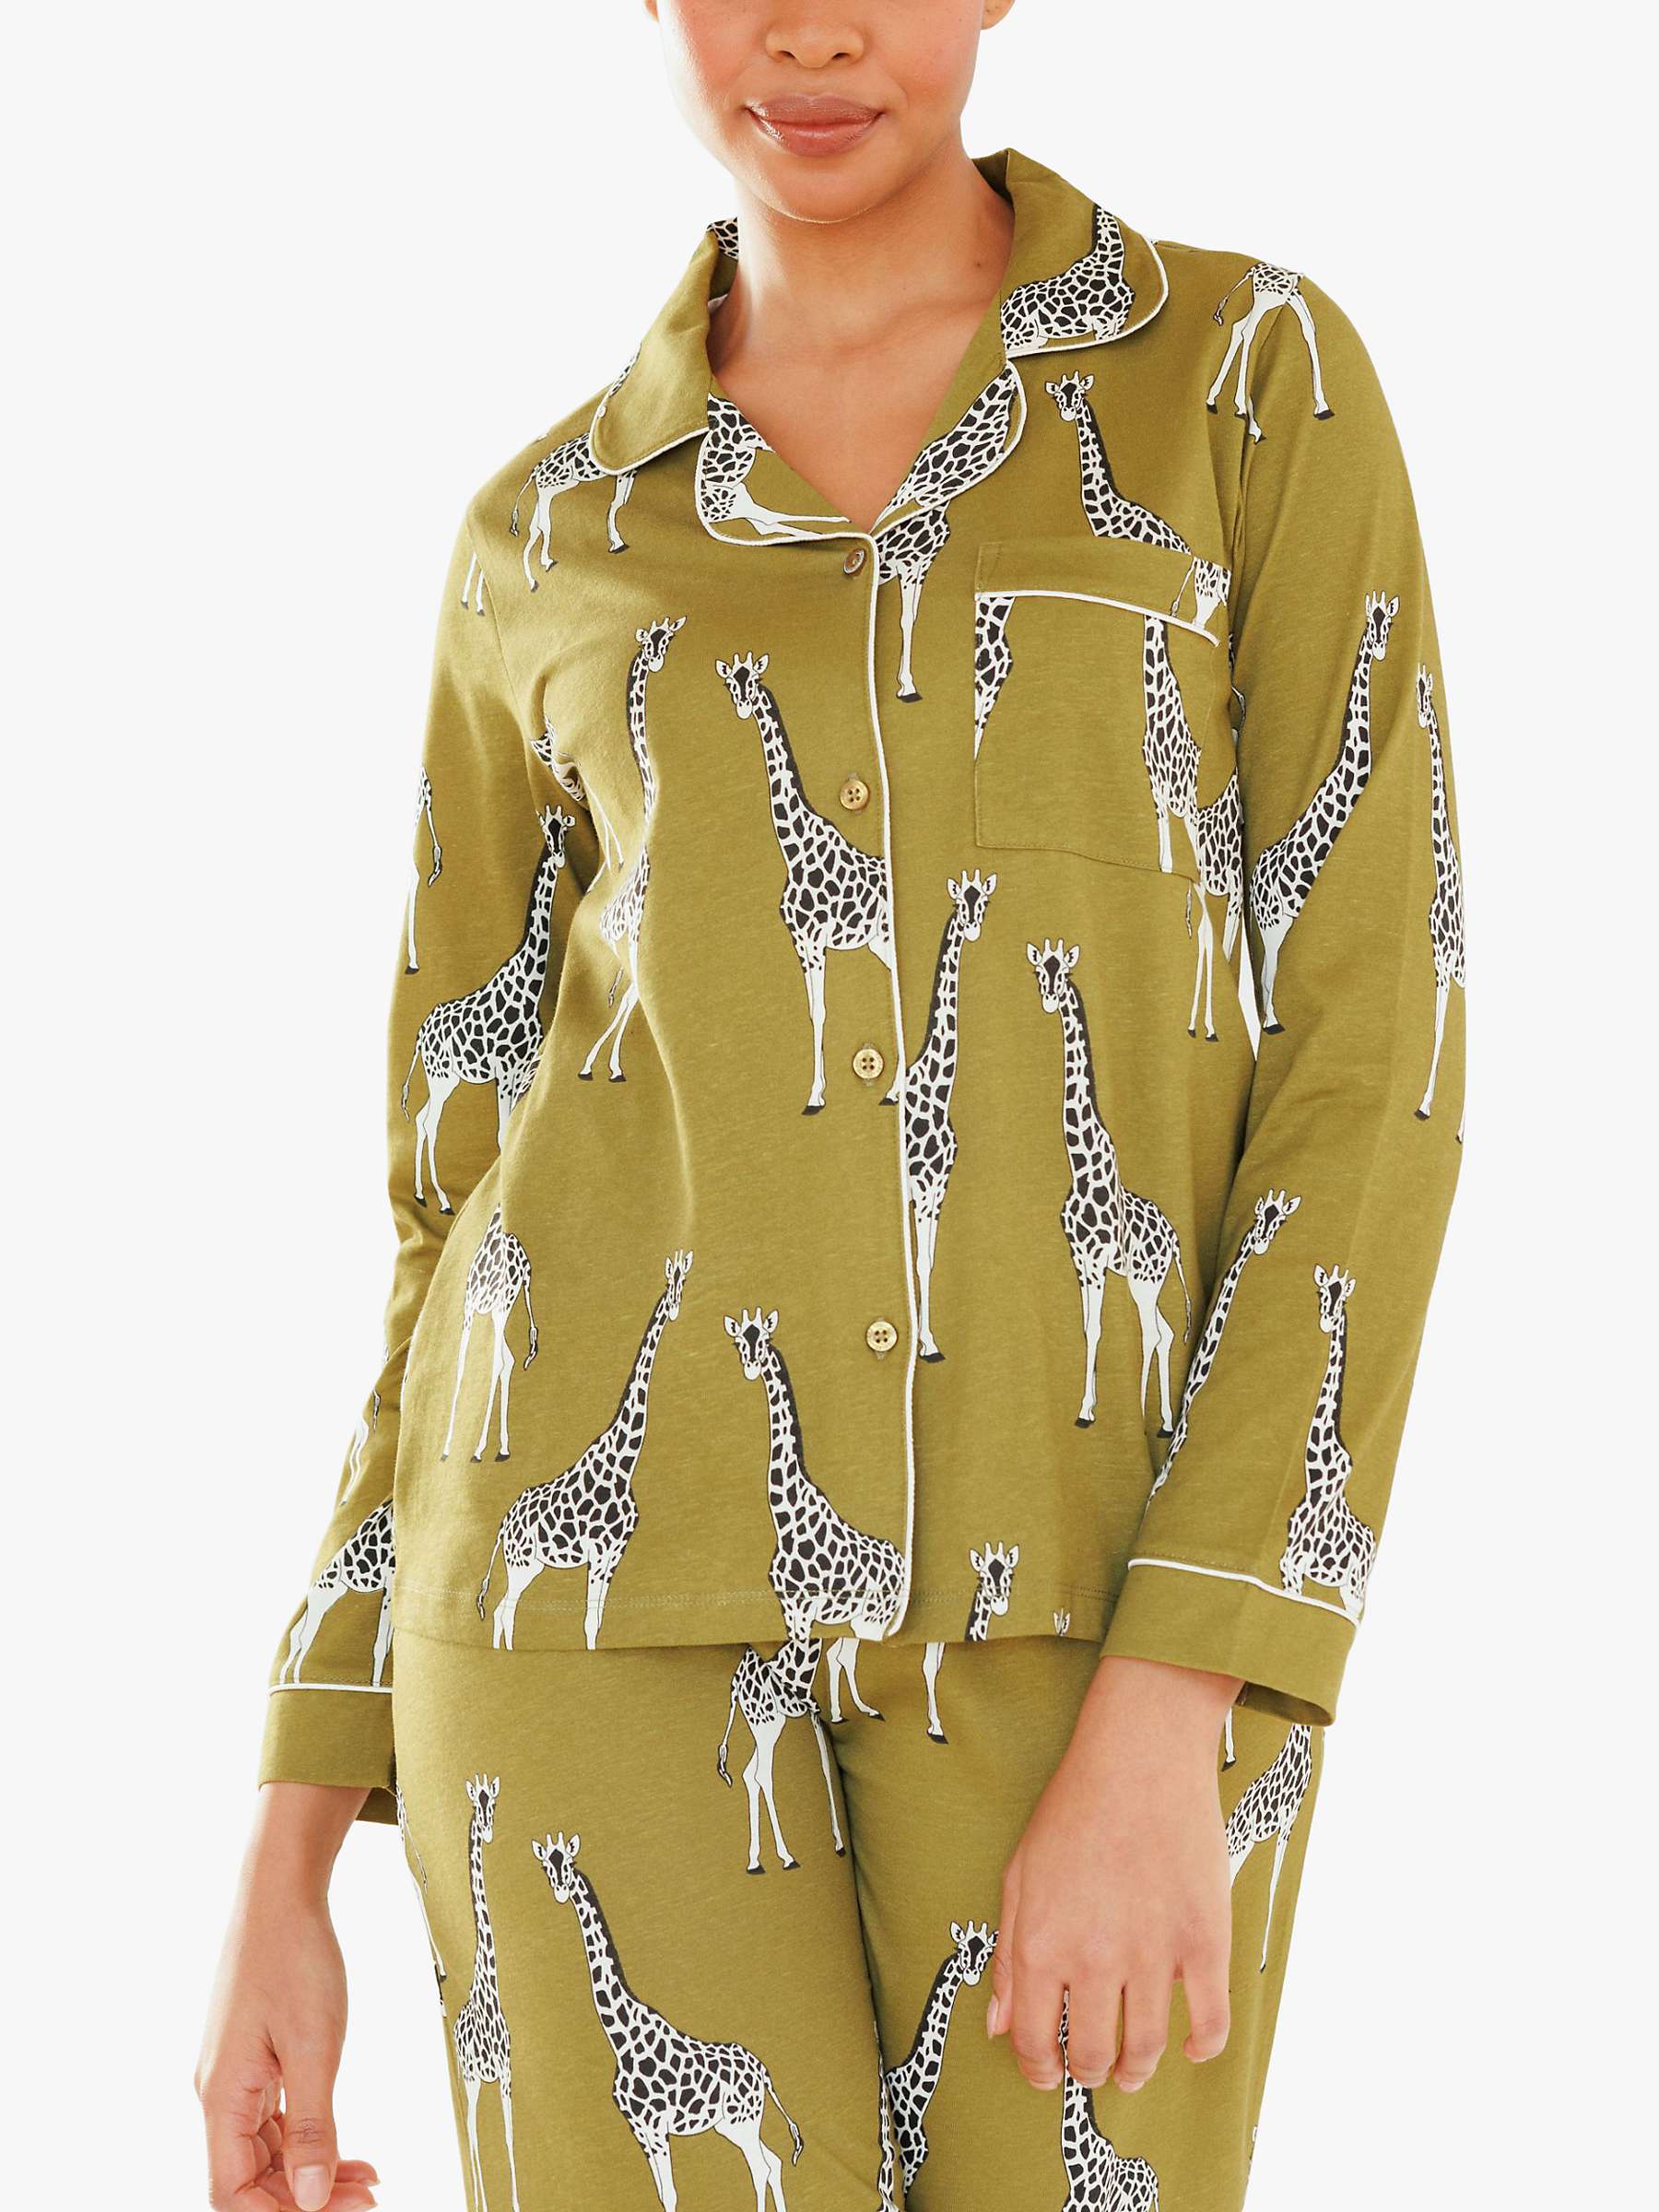 Buy Chelsea Peers Organic Cotton Giraffe Pyjamas Online at johnlewis.com